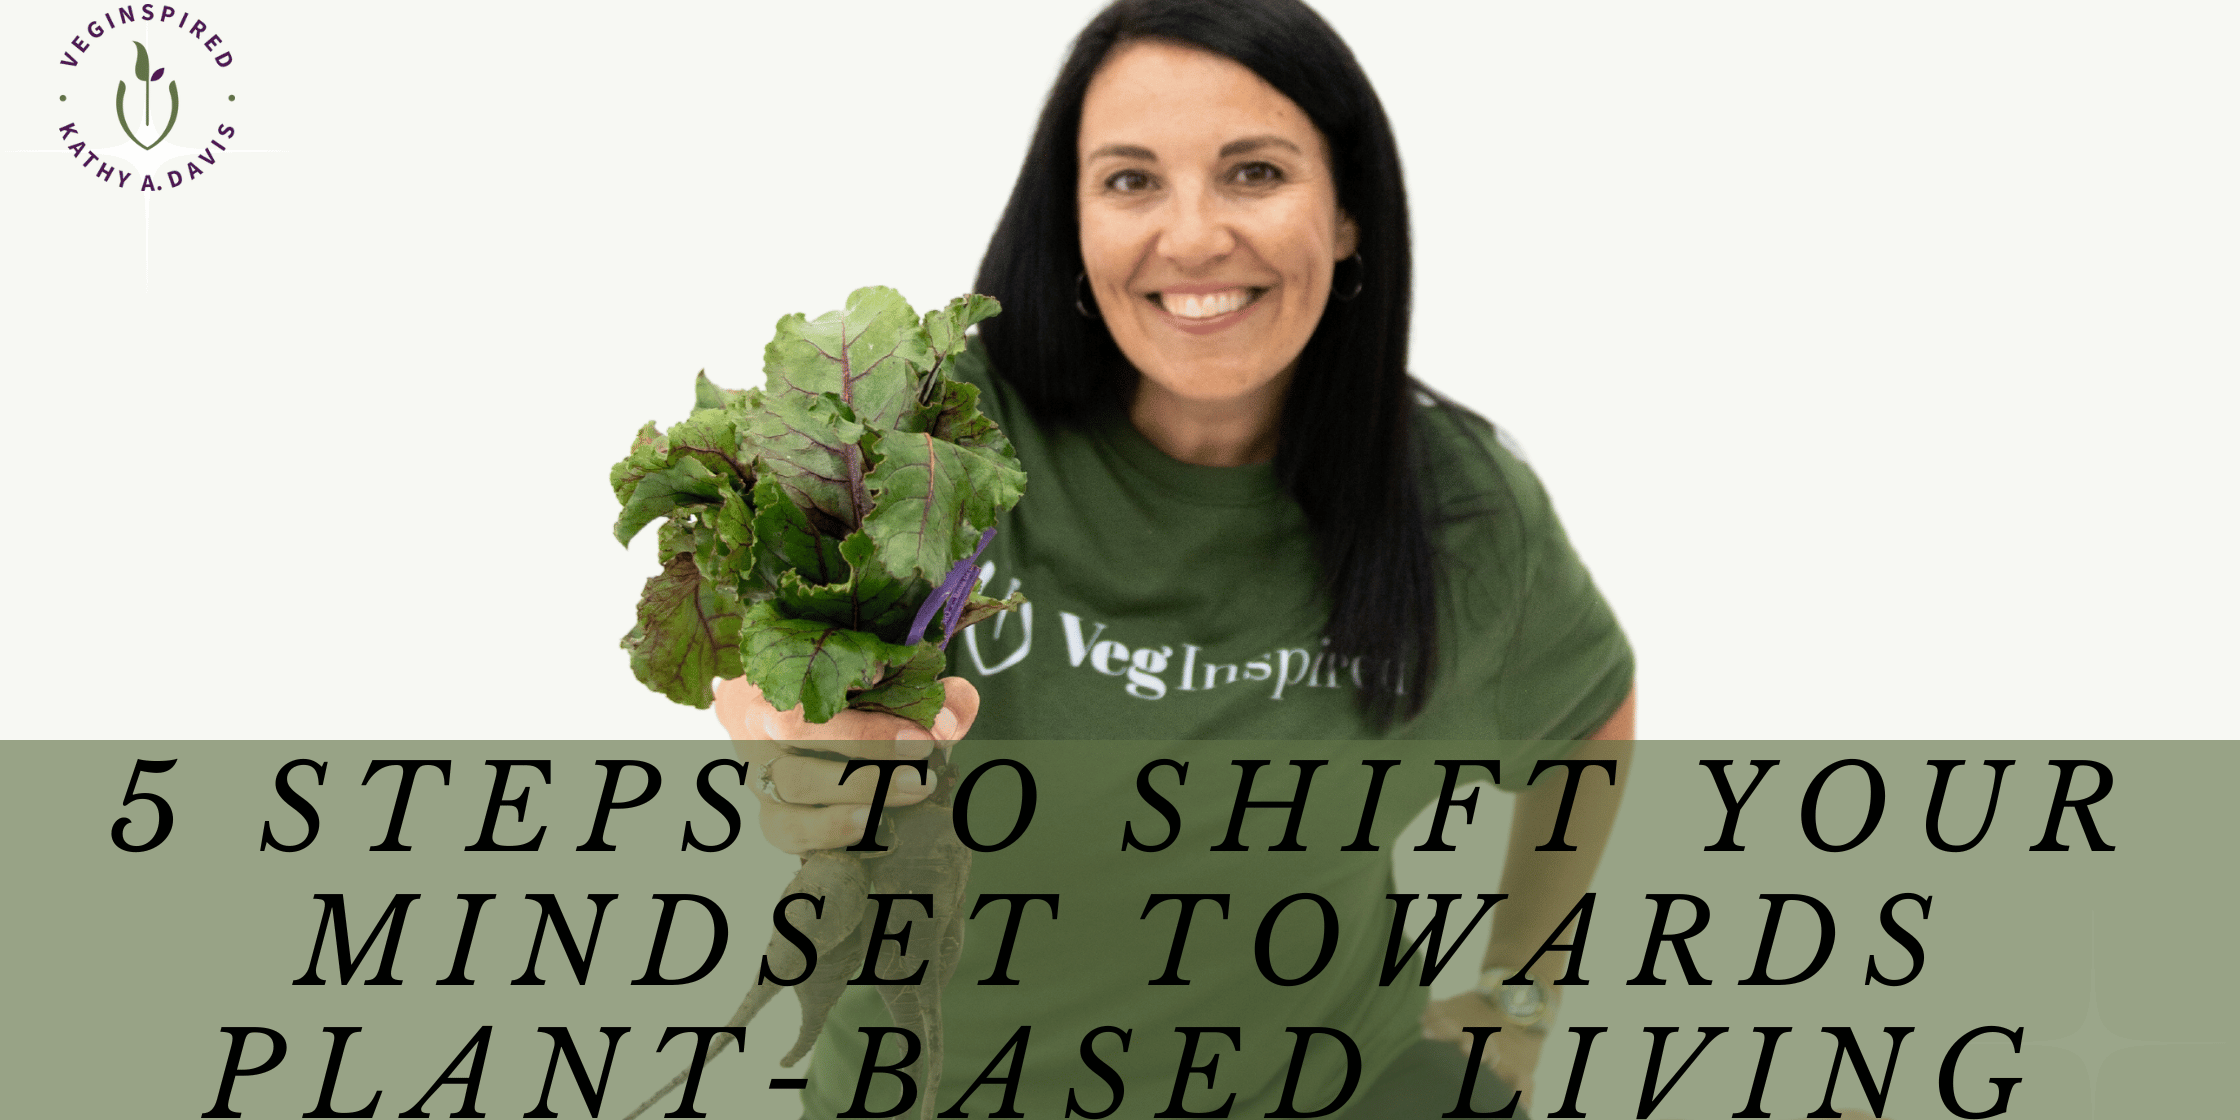 Kathy Davis, Veginspired holding beets - cover image for 5 steps to shift your mindset toward plant-based living because mindset matters